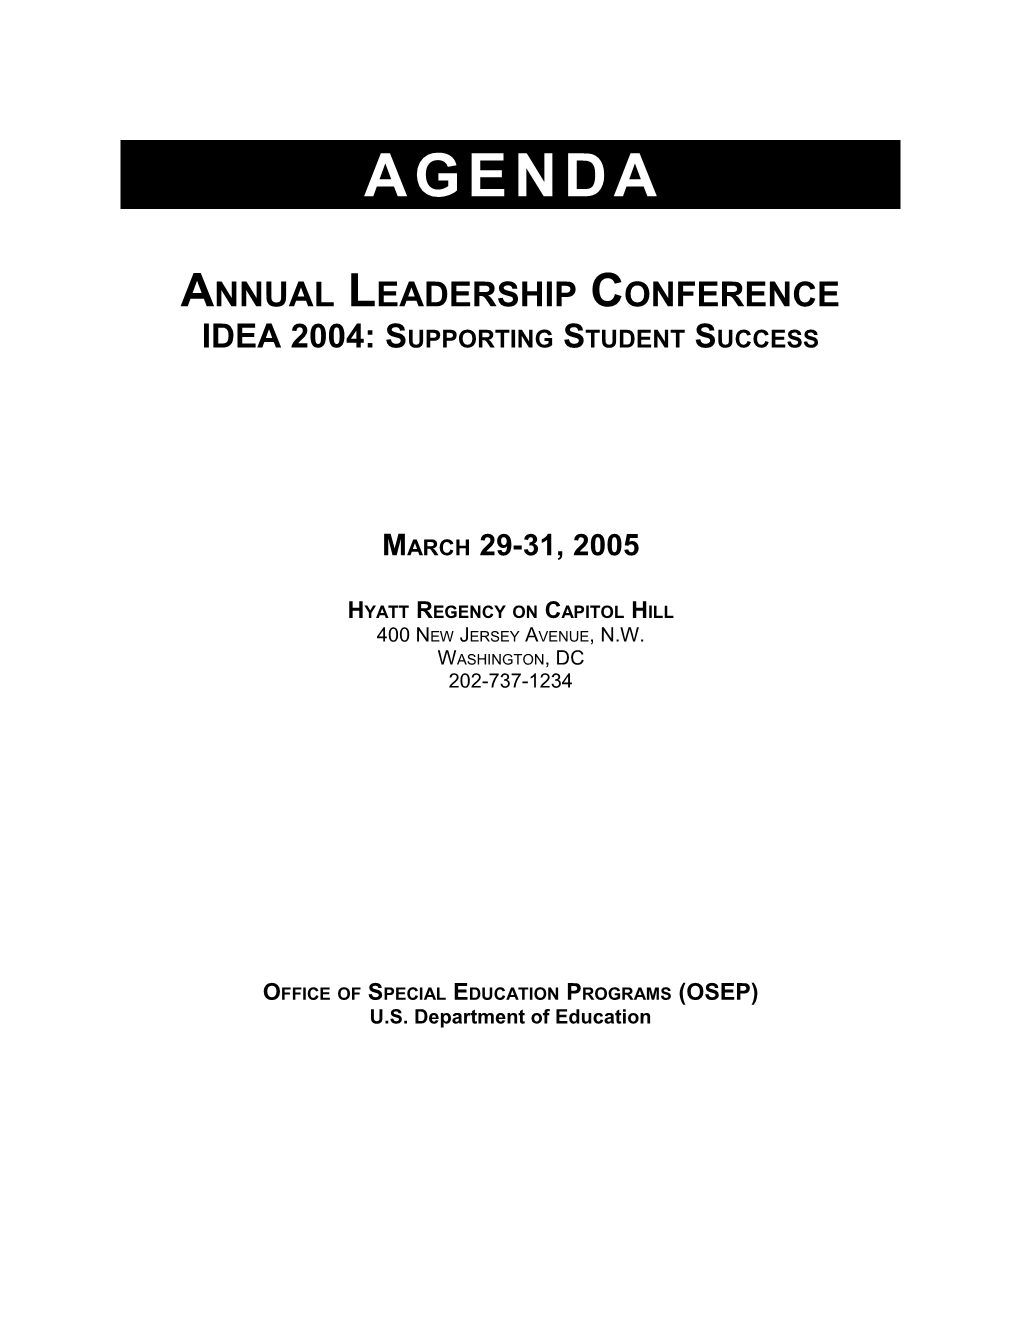 OSEP Annual Leadership Conference 2005 - Agenda